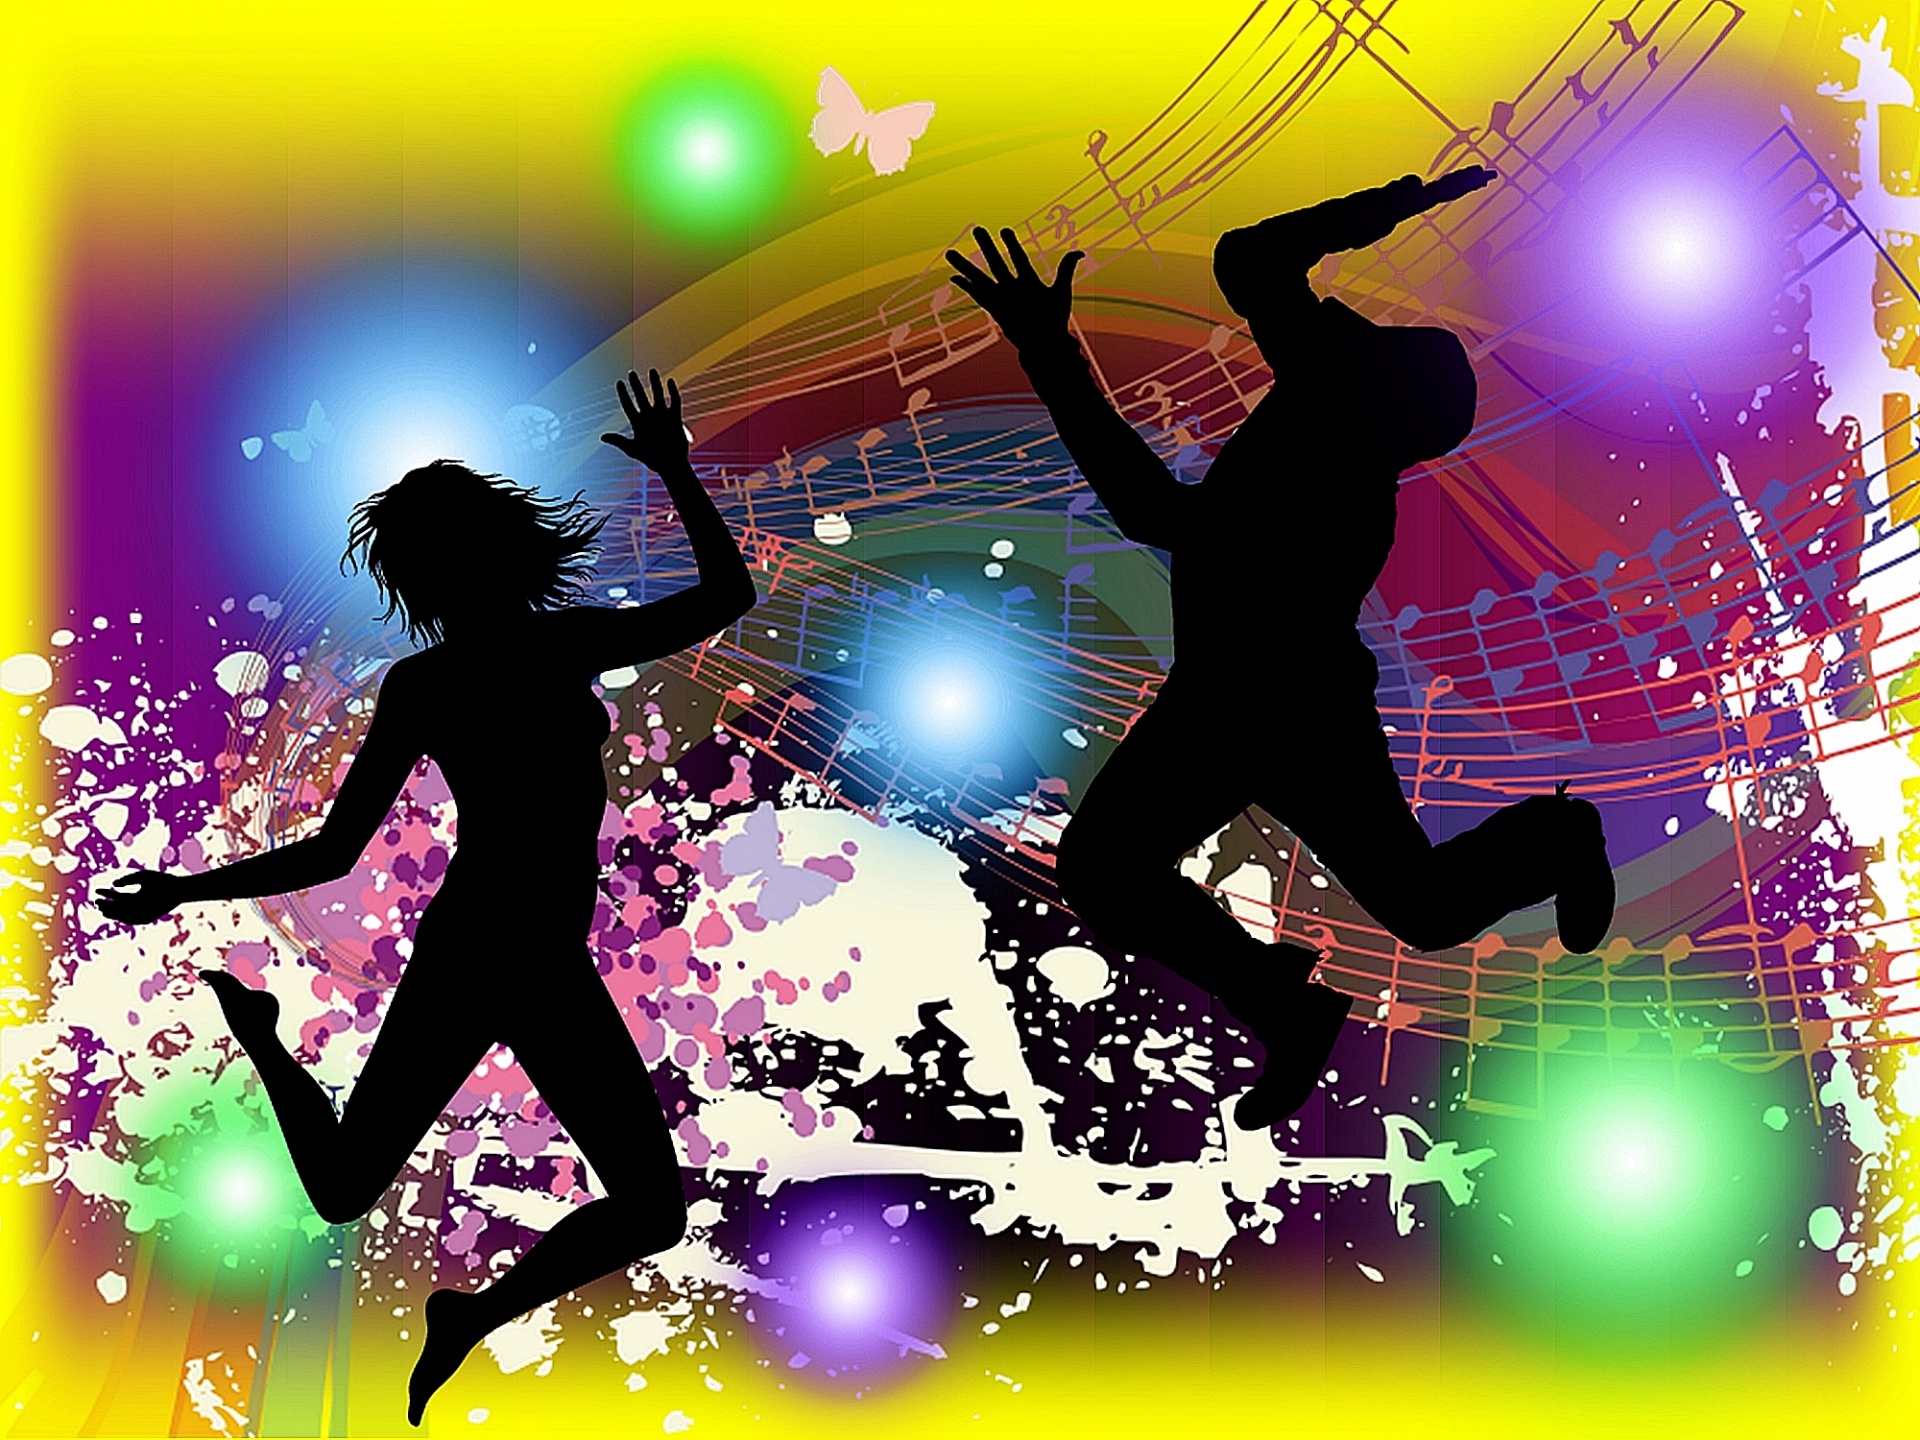 Музыка танцы музыка давайте. Открытка «танец». Танцующая открытка. Музыка танцы клипарт. Открытки с международным днем танца.